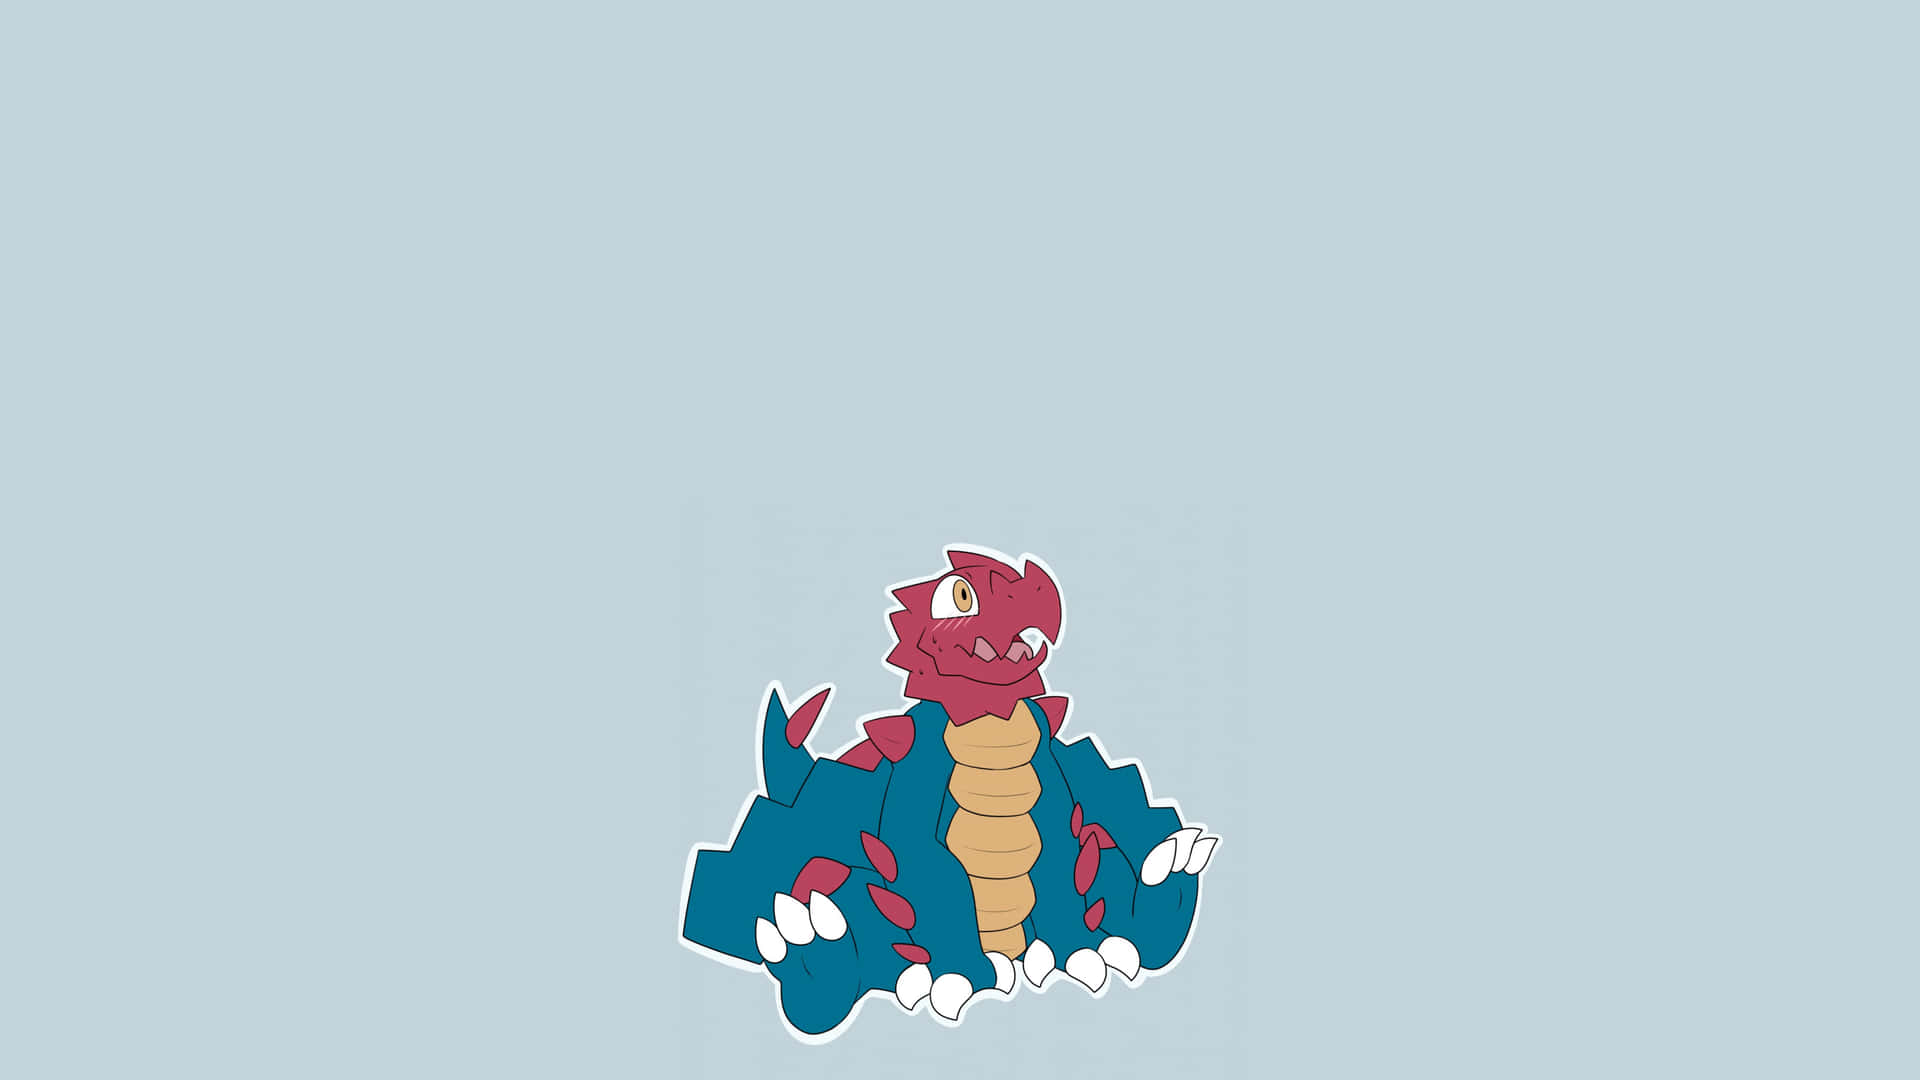 Druddigon Pokemon Illustration Wallpaper